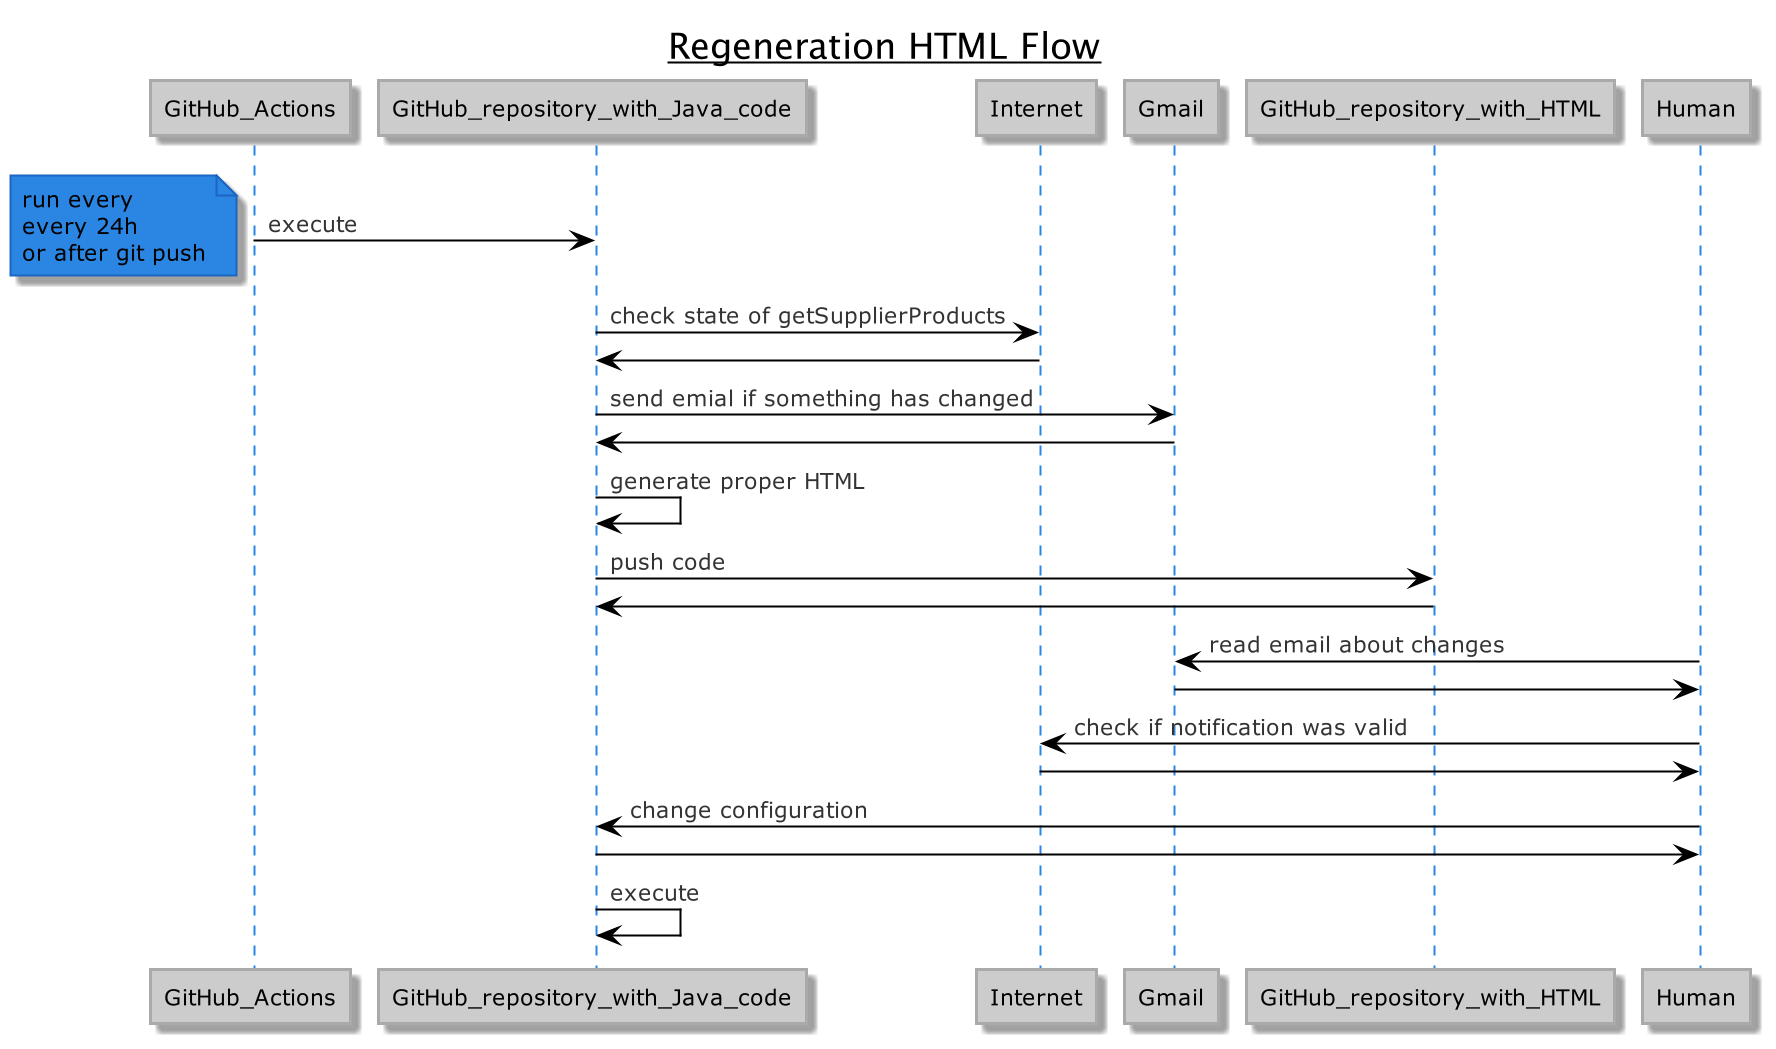 Regeneration of HTML flow